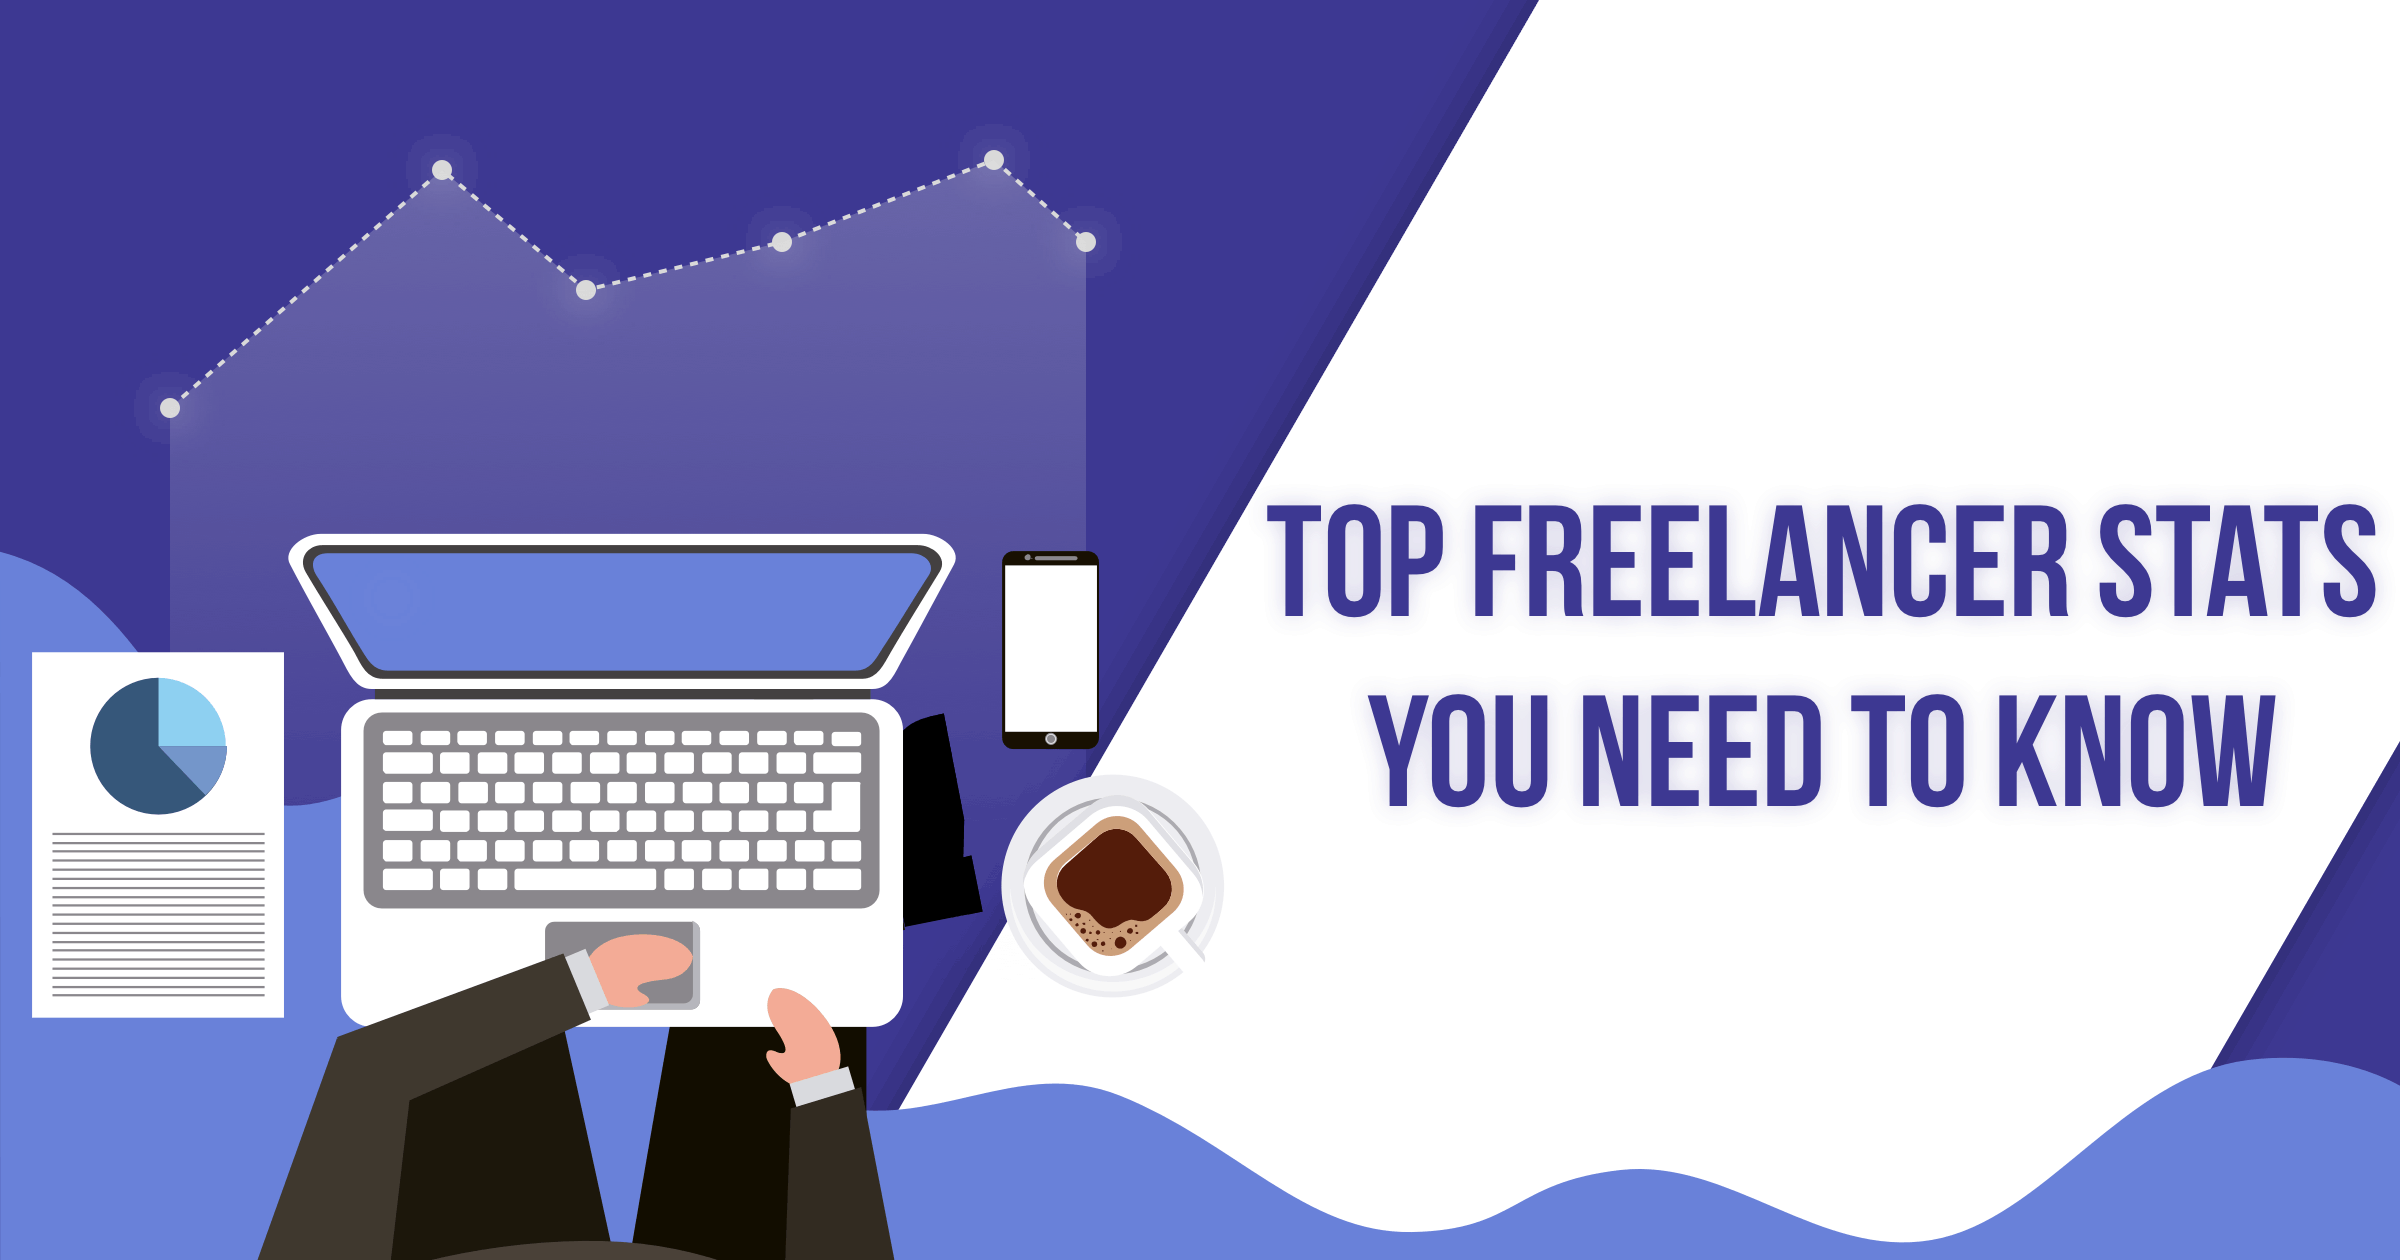 Топ фрилансер. Top freelance. Top freelance websites.